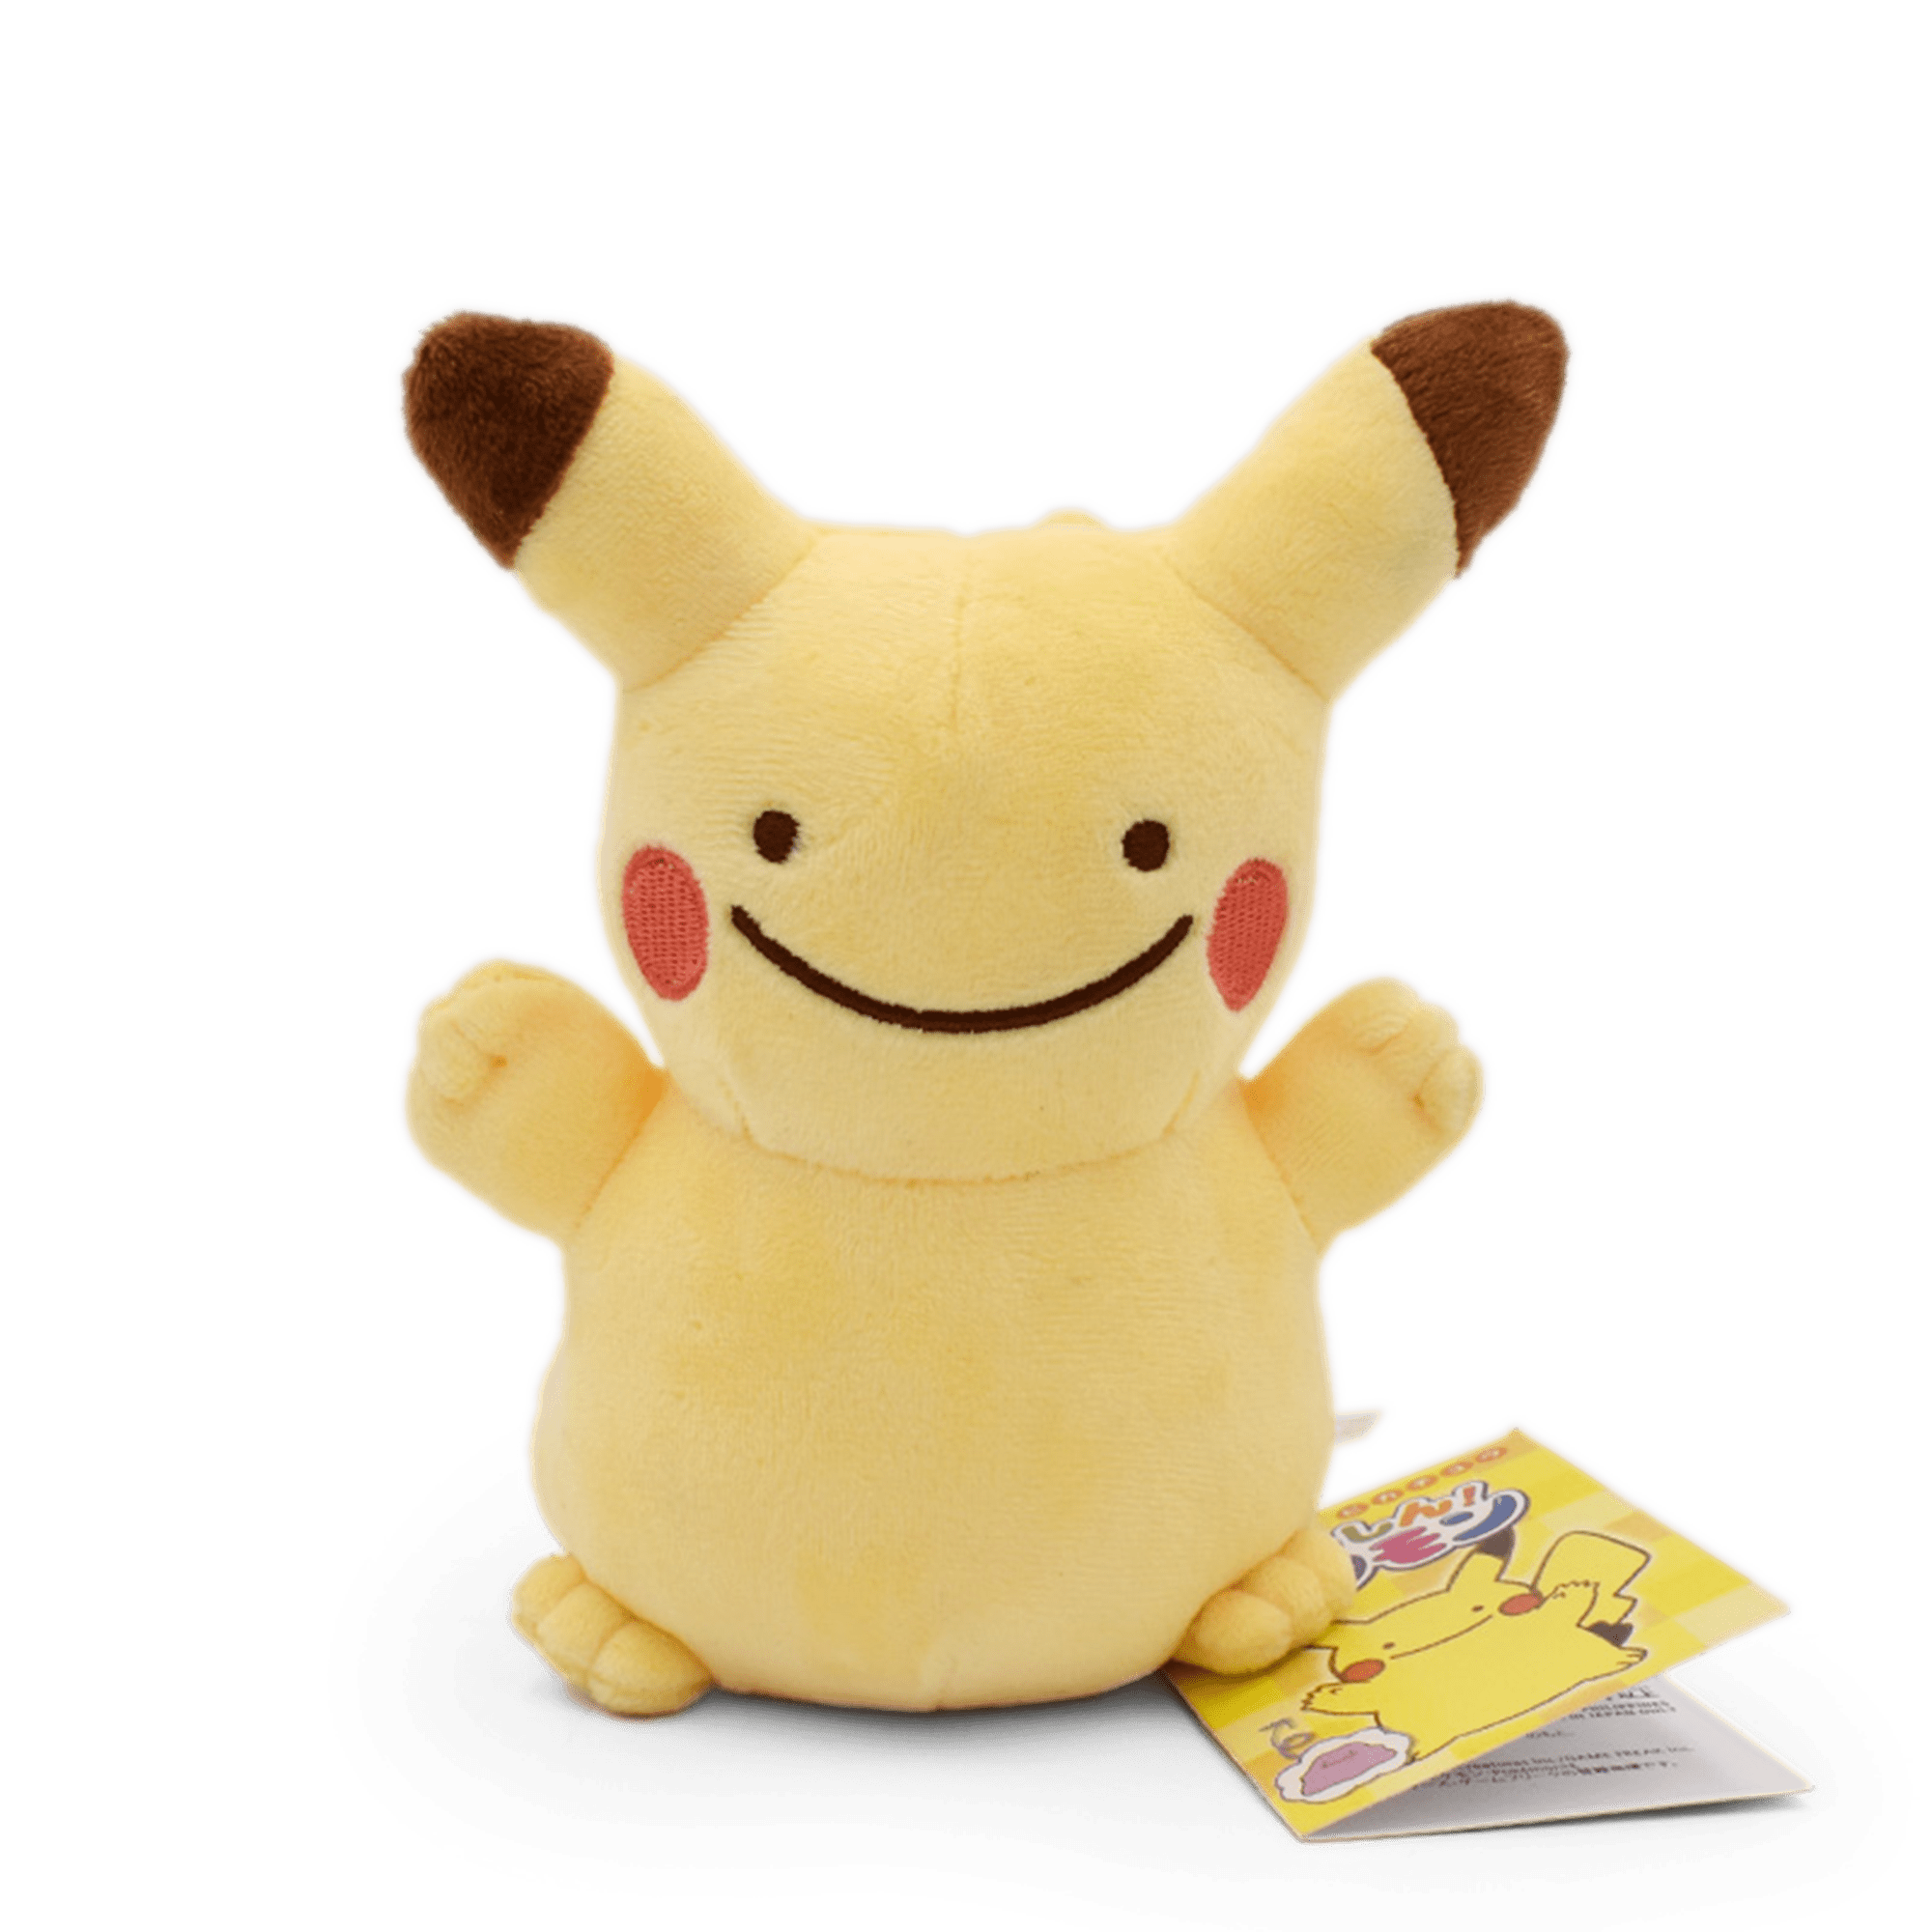 Pokemon Pikachu 7" BRAND NEW 17cm Plush Soft Toy Teddy 